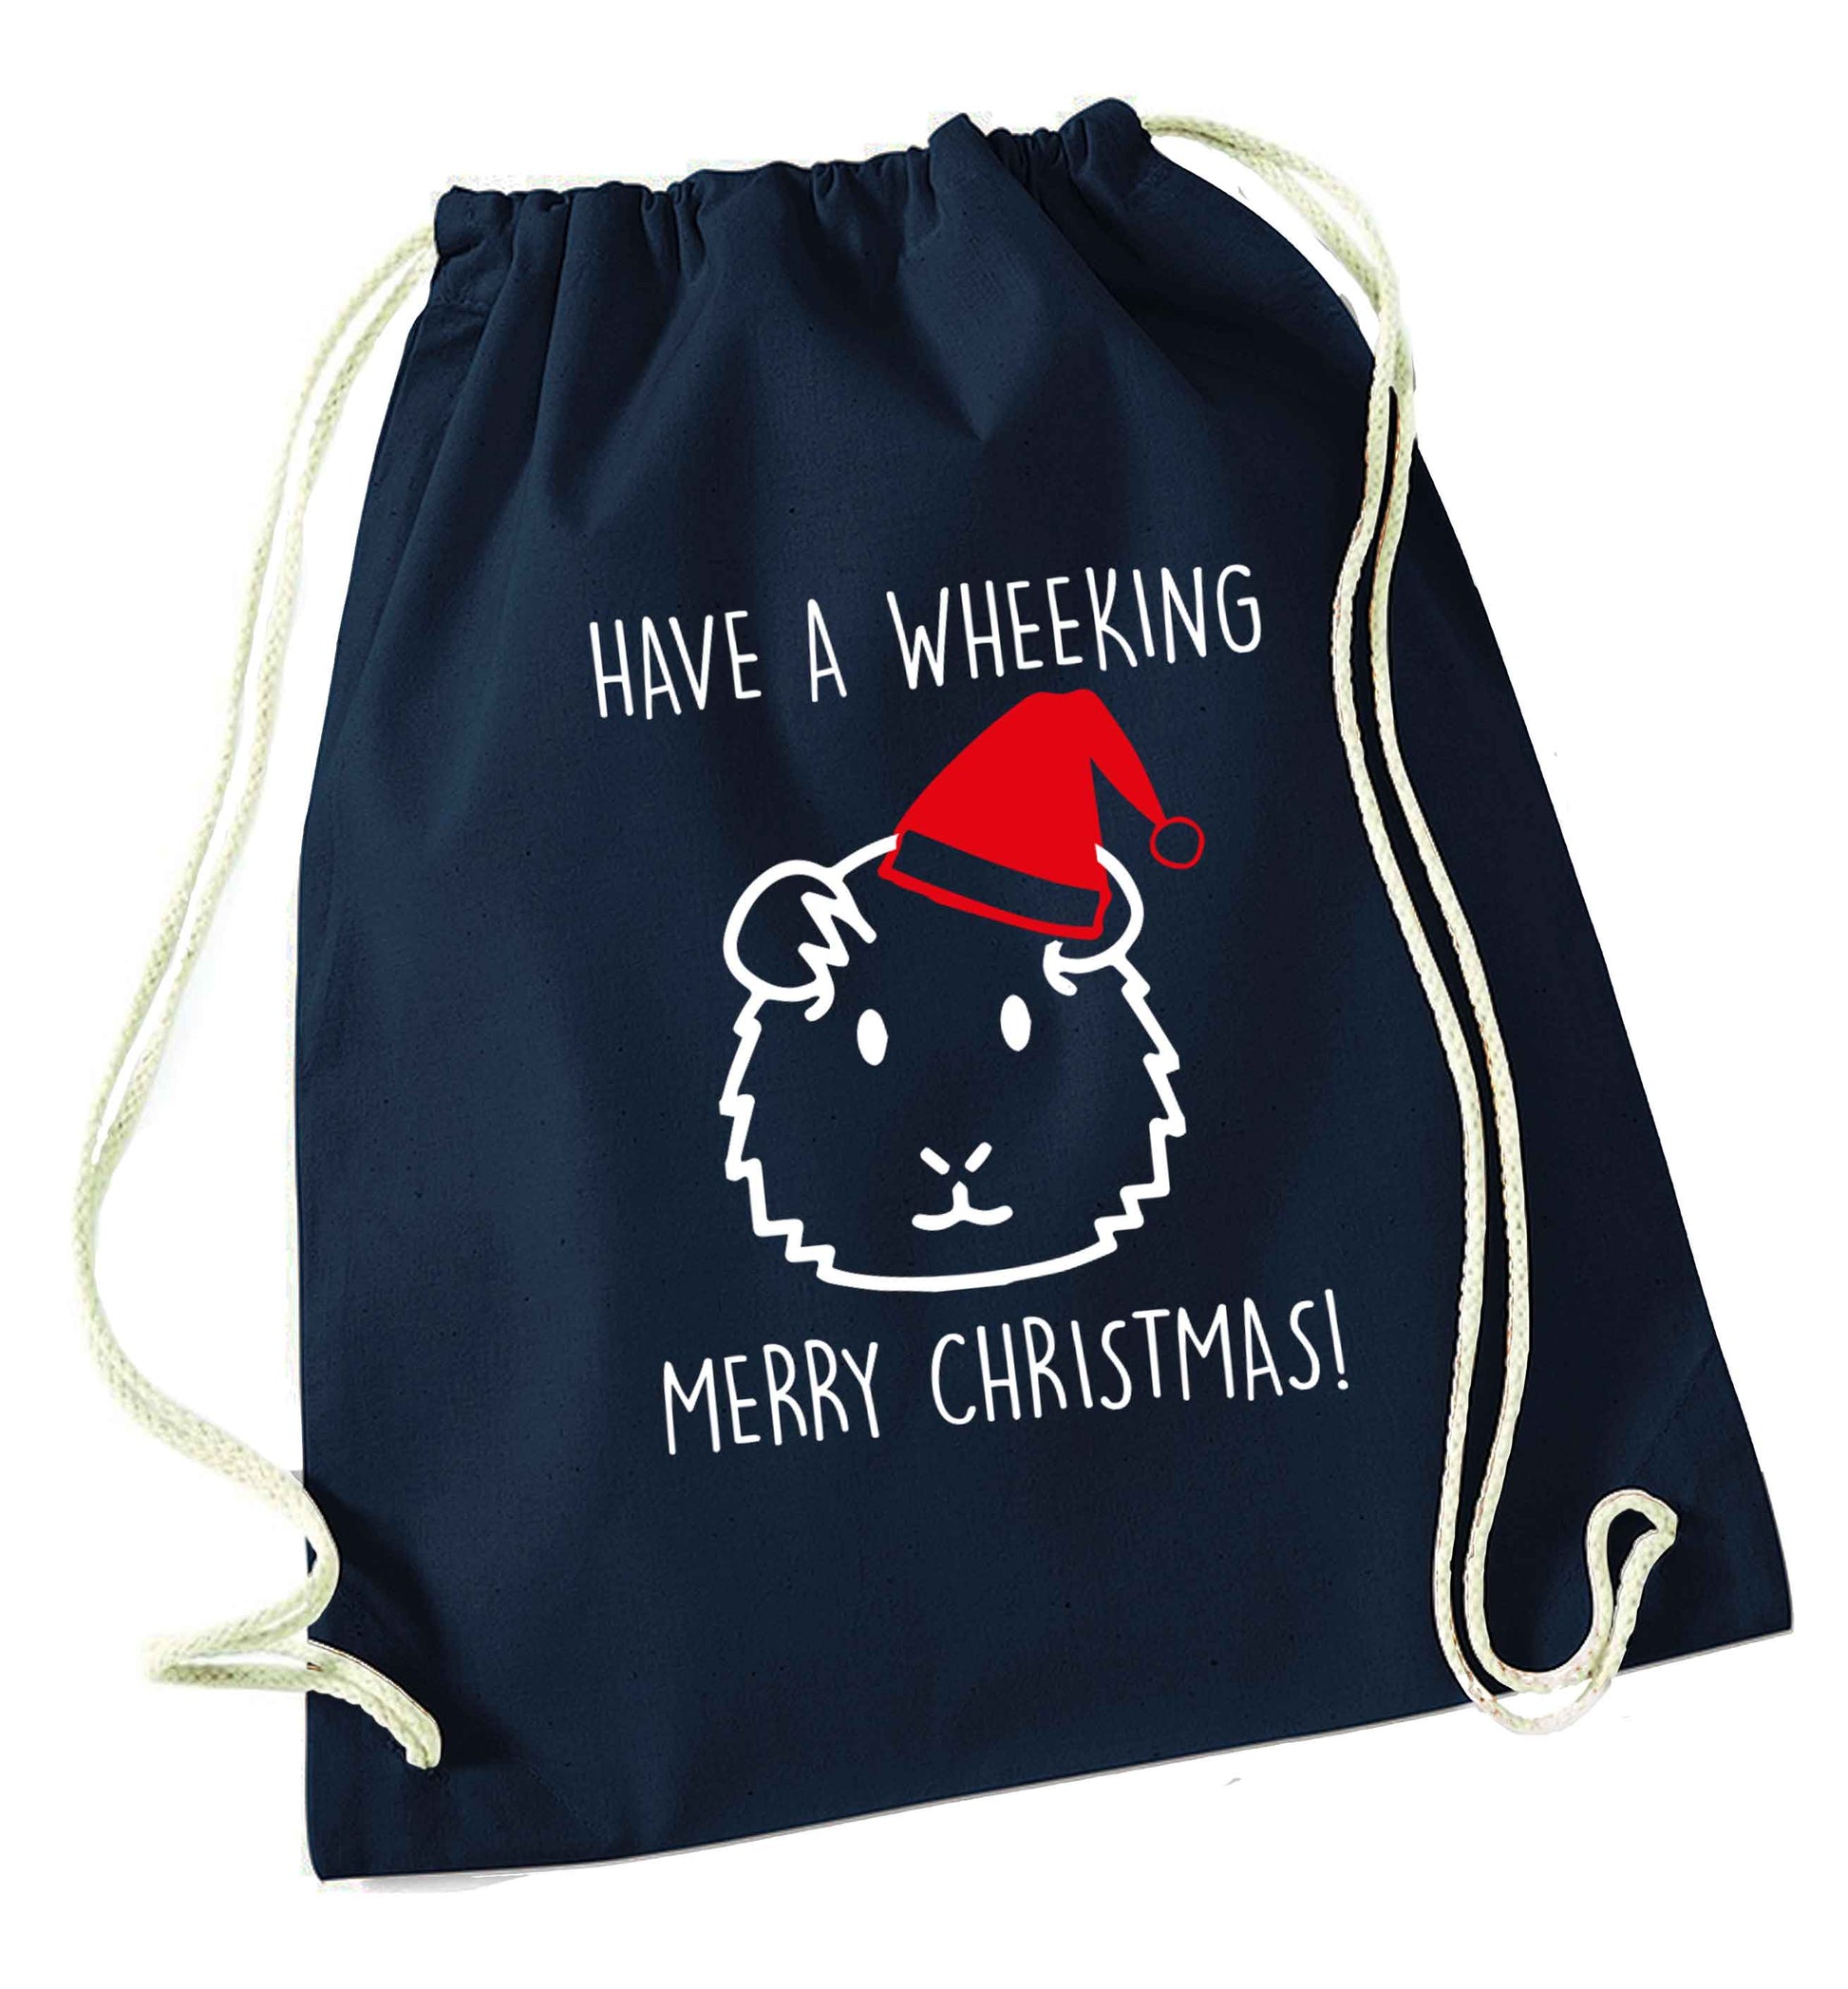 Have a wheeking merry Christmas navy drawstring bag